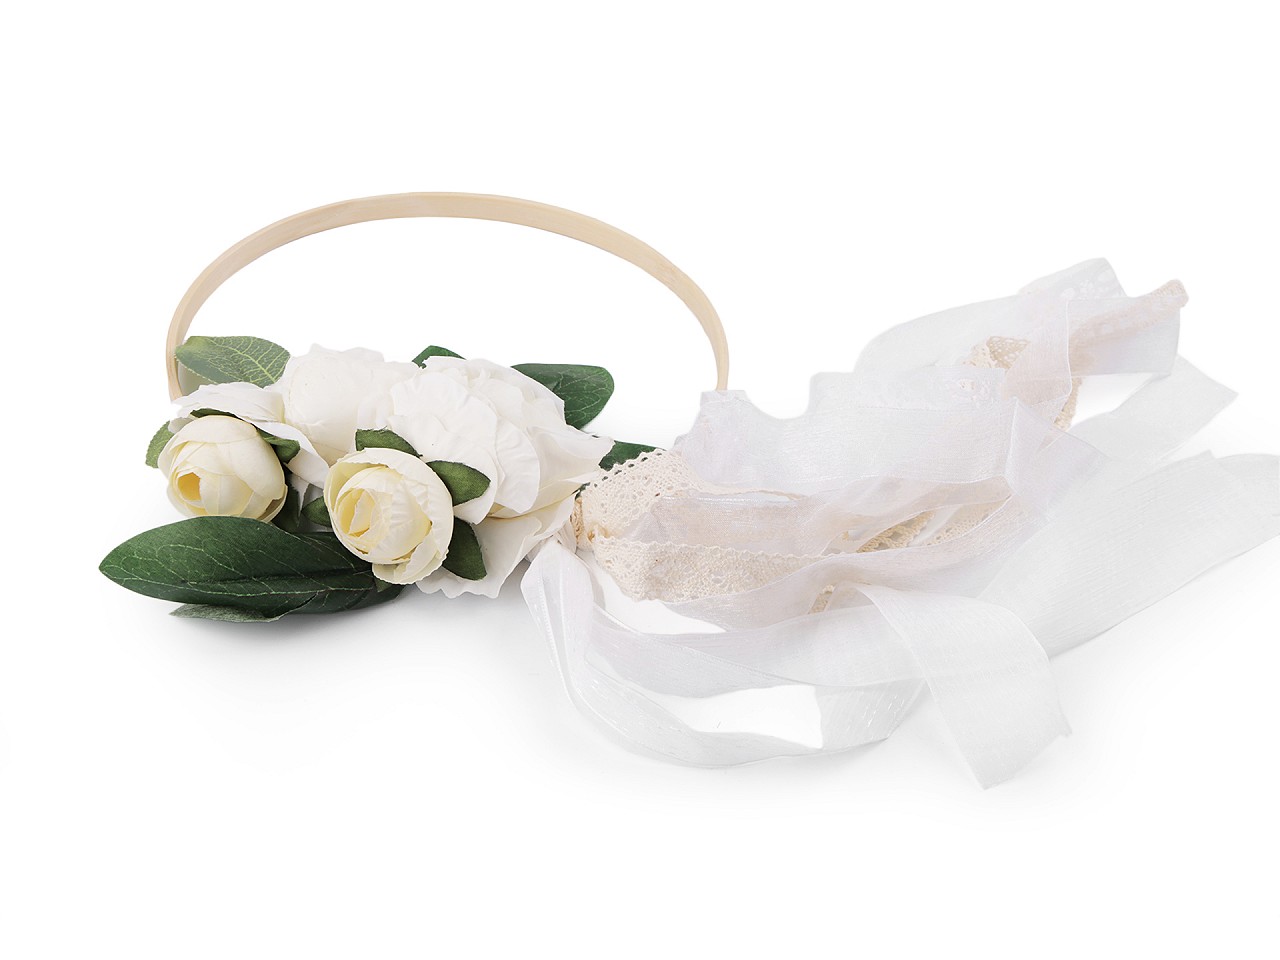 Textillux.sk - produkt Svadobná dekorácia kruh s kvetmi Ø19,5 cm - 1 krémová najsvetl čipka